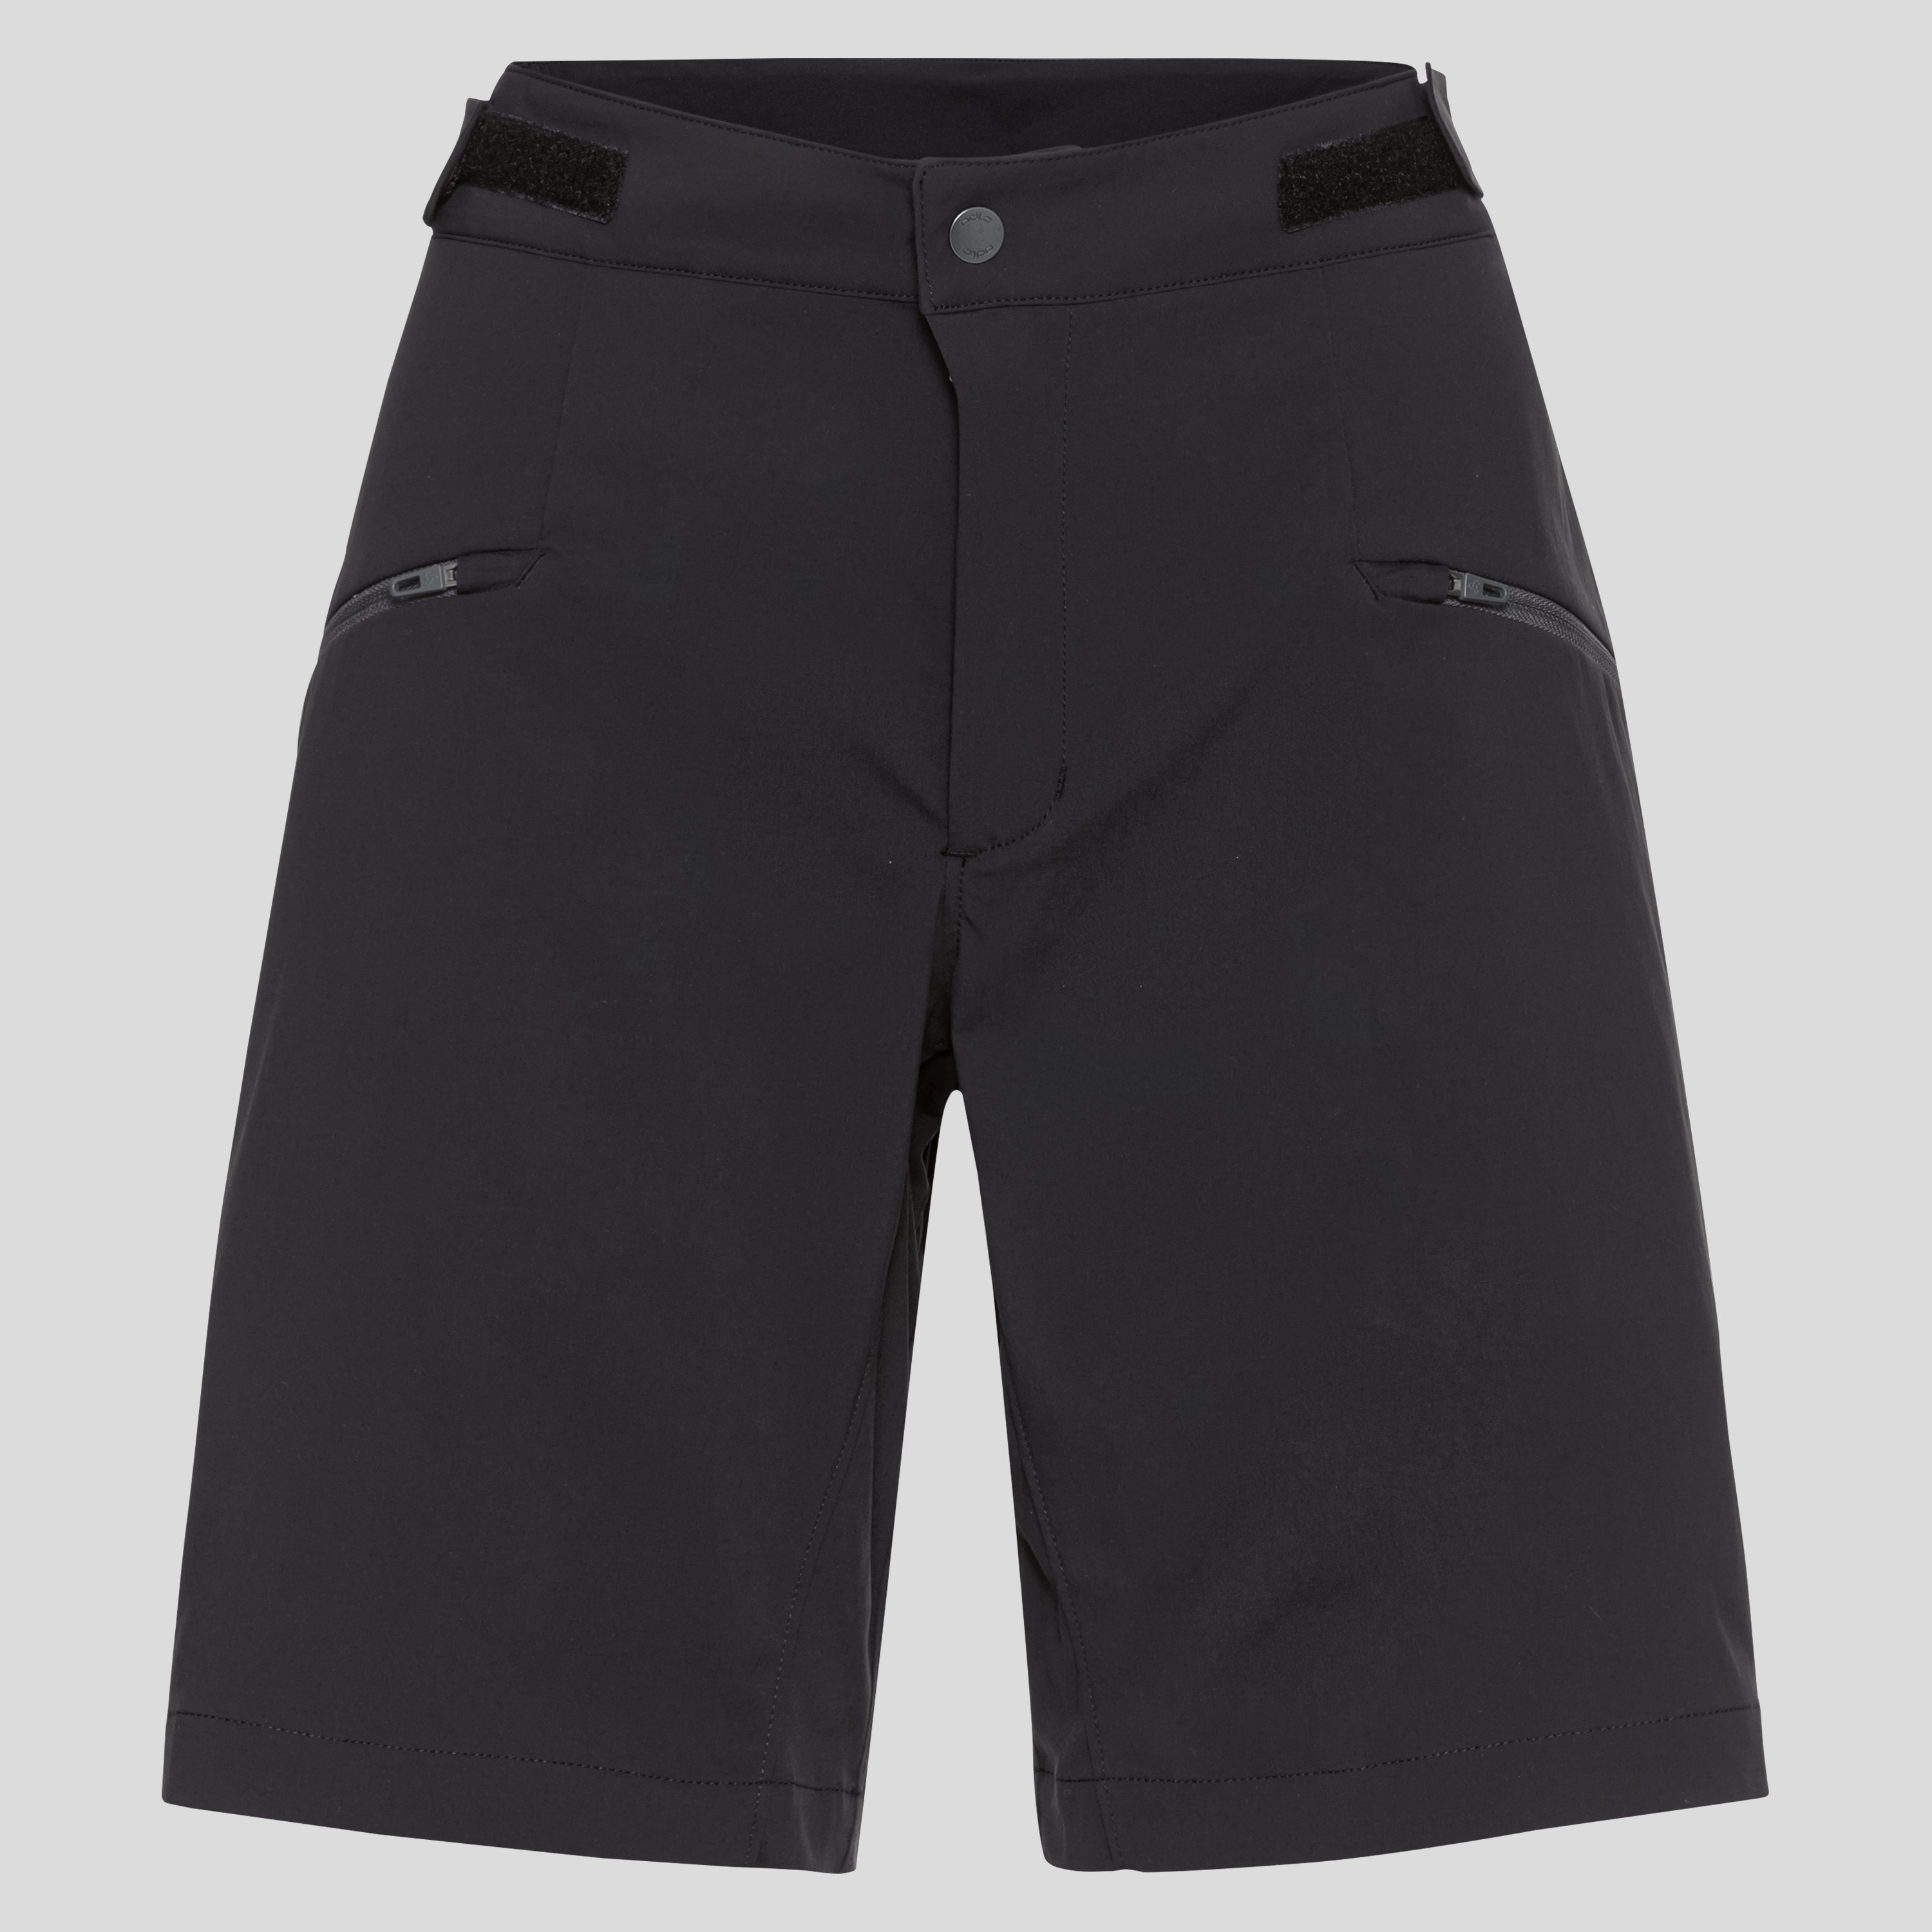 ODLO Morzine MTB-Shorts für Damen, 38, schwarz